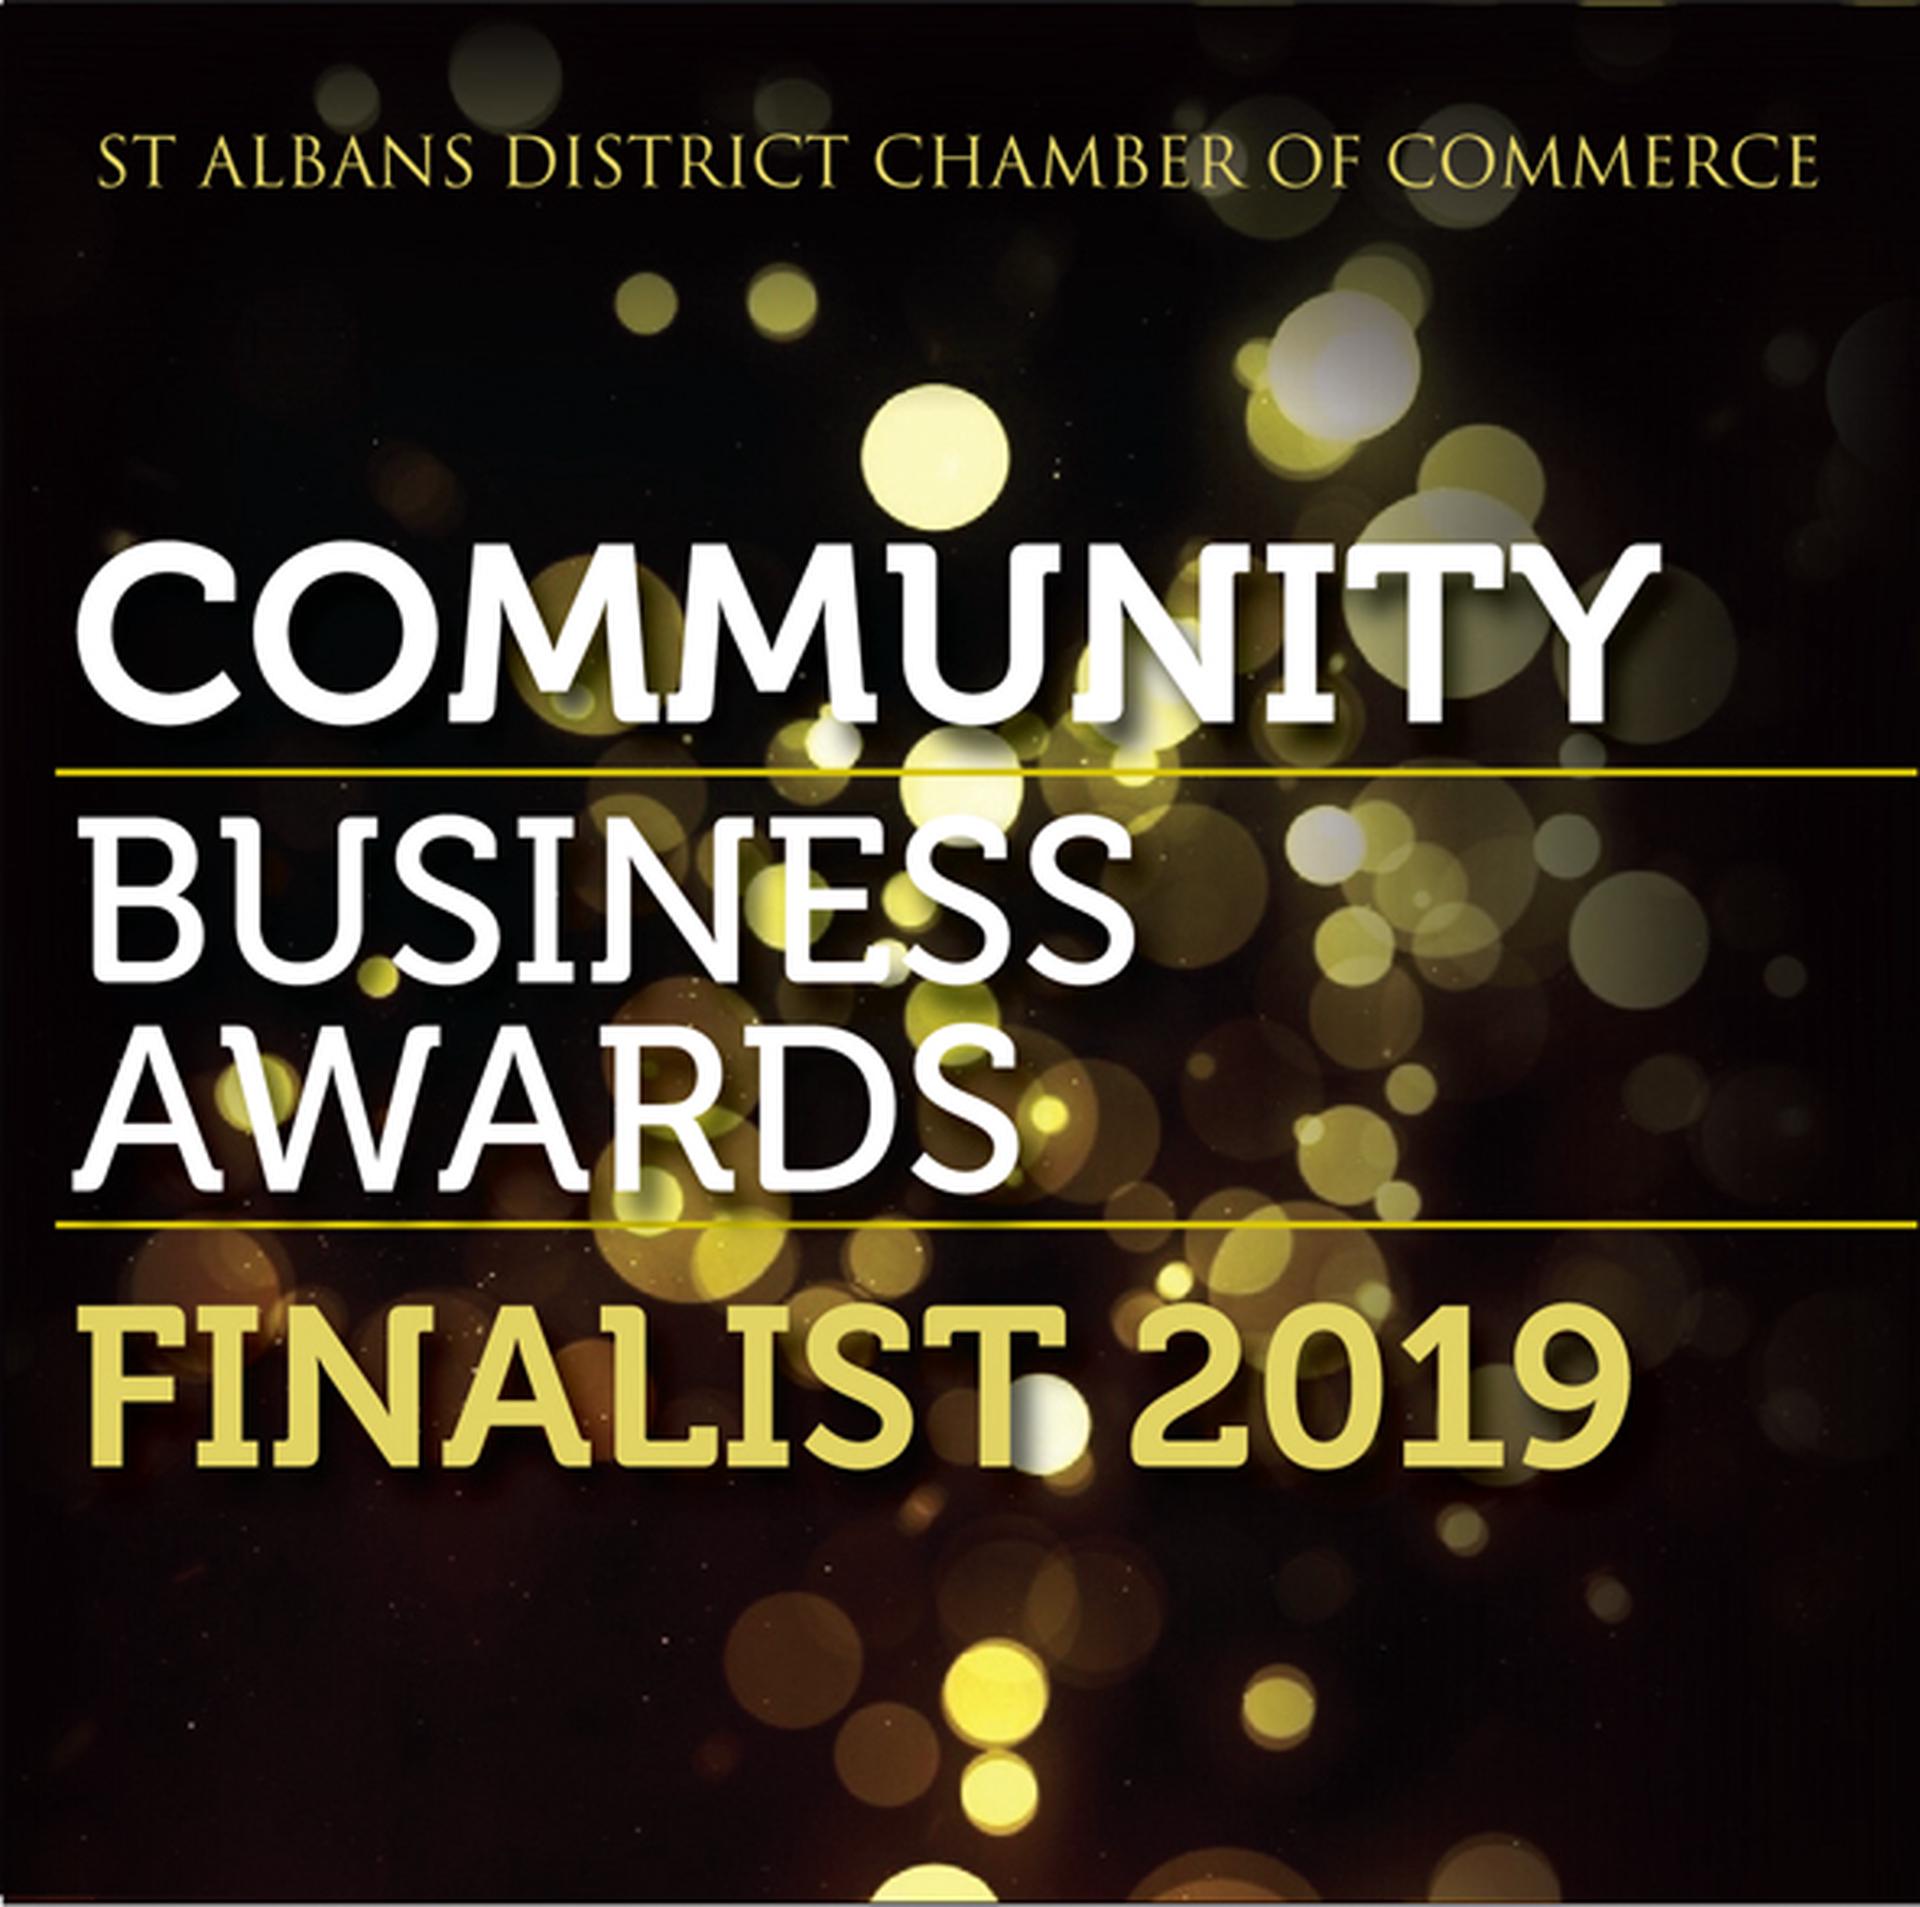 Community business awards finalist 2019